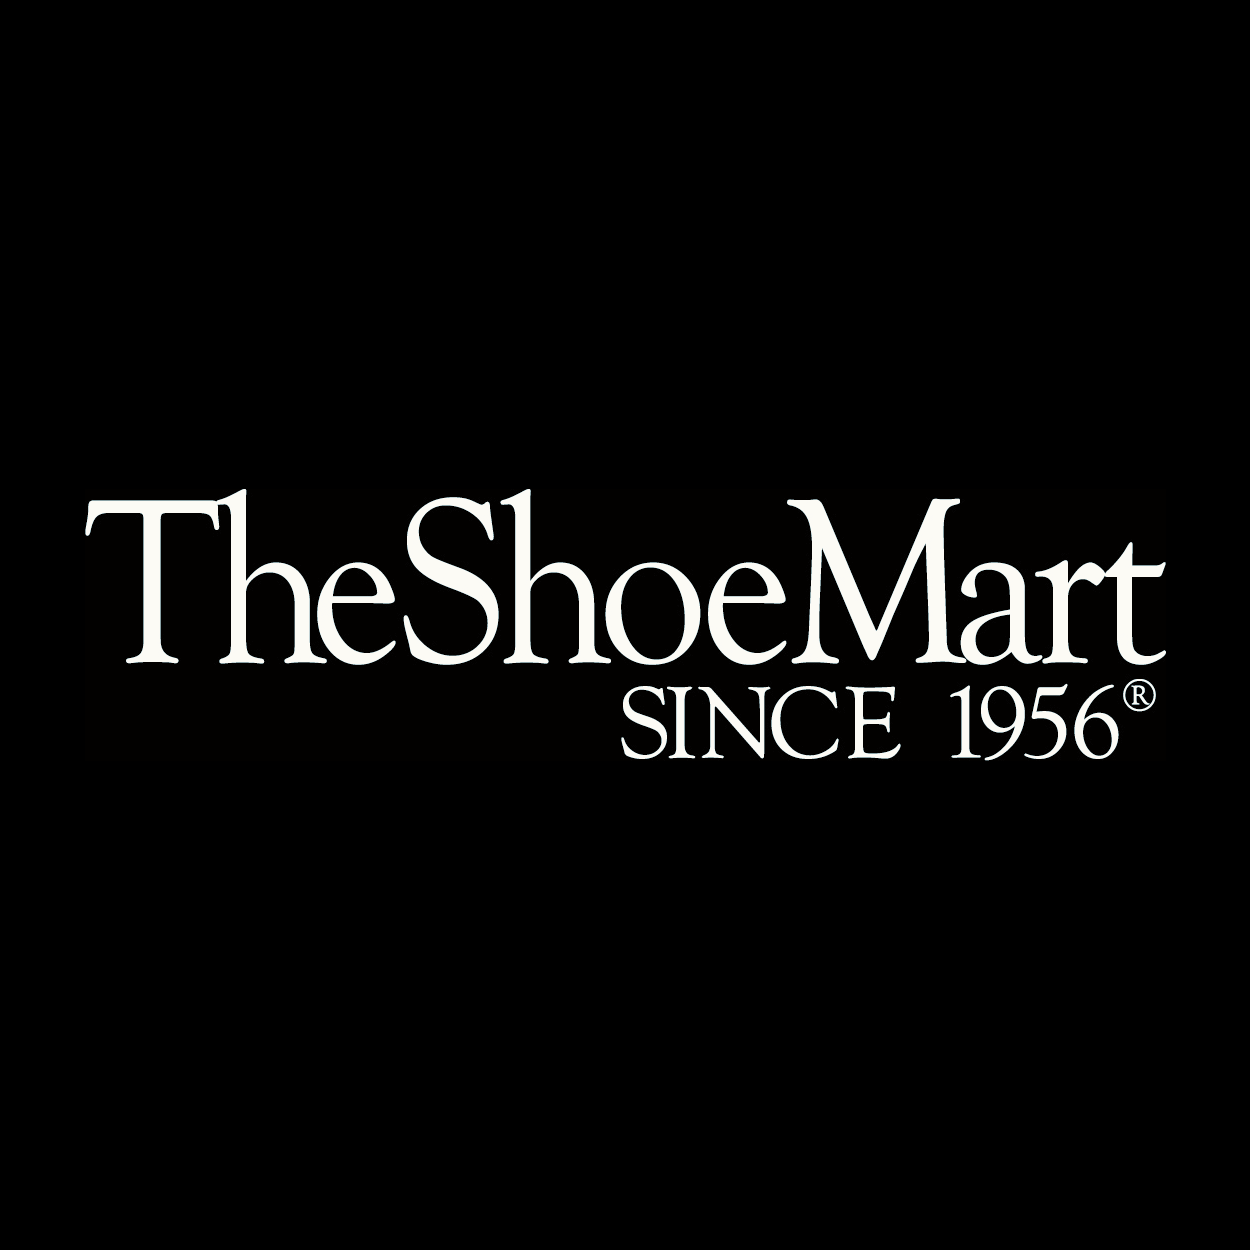 The Shoemart - DIGITALMARKETING.com